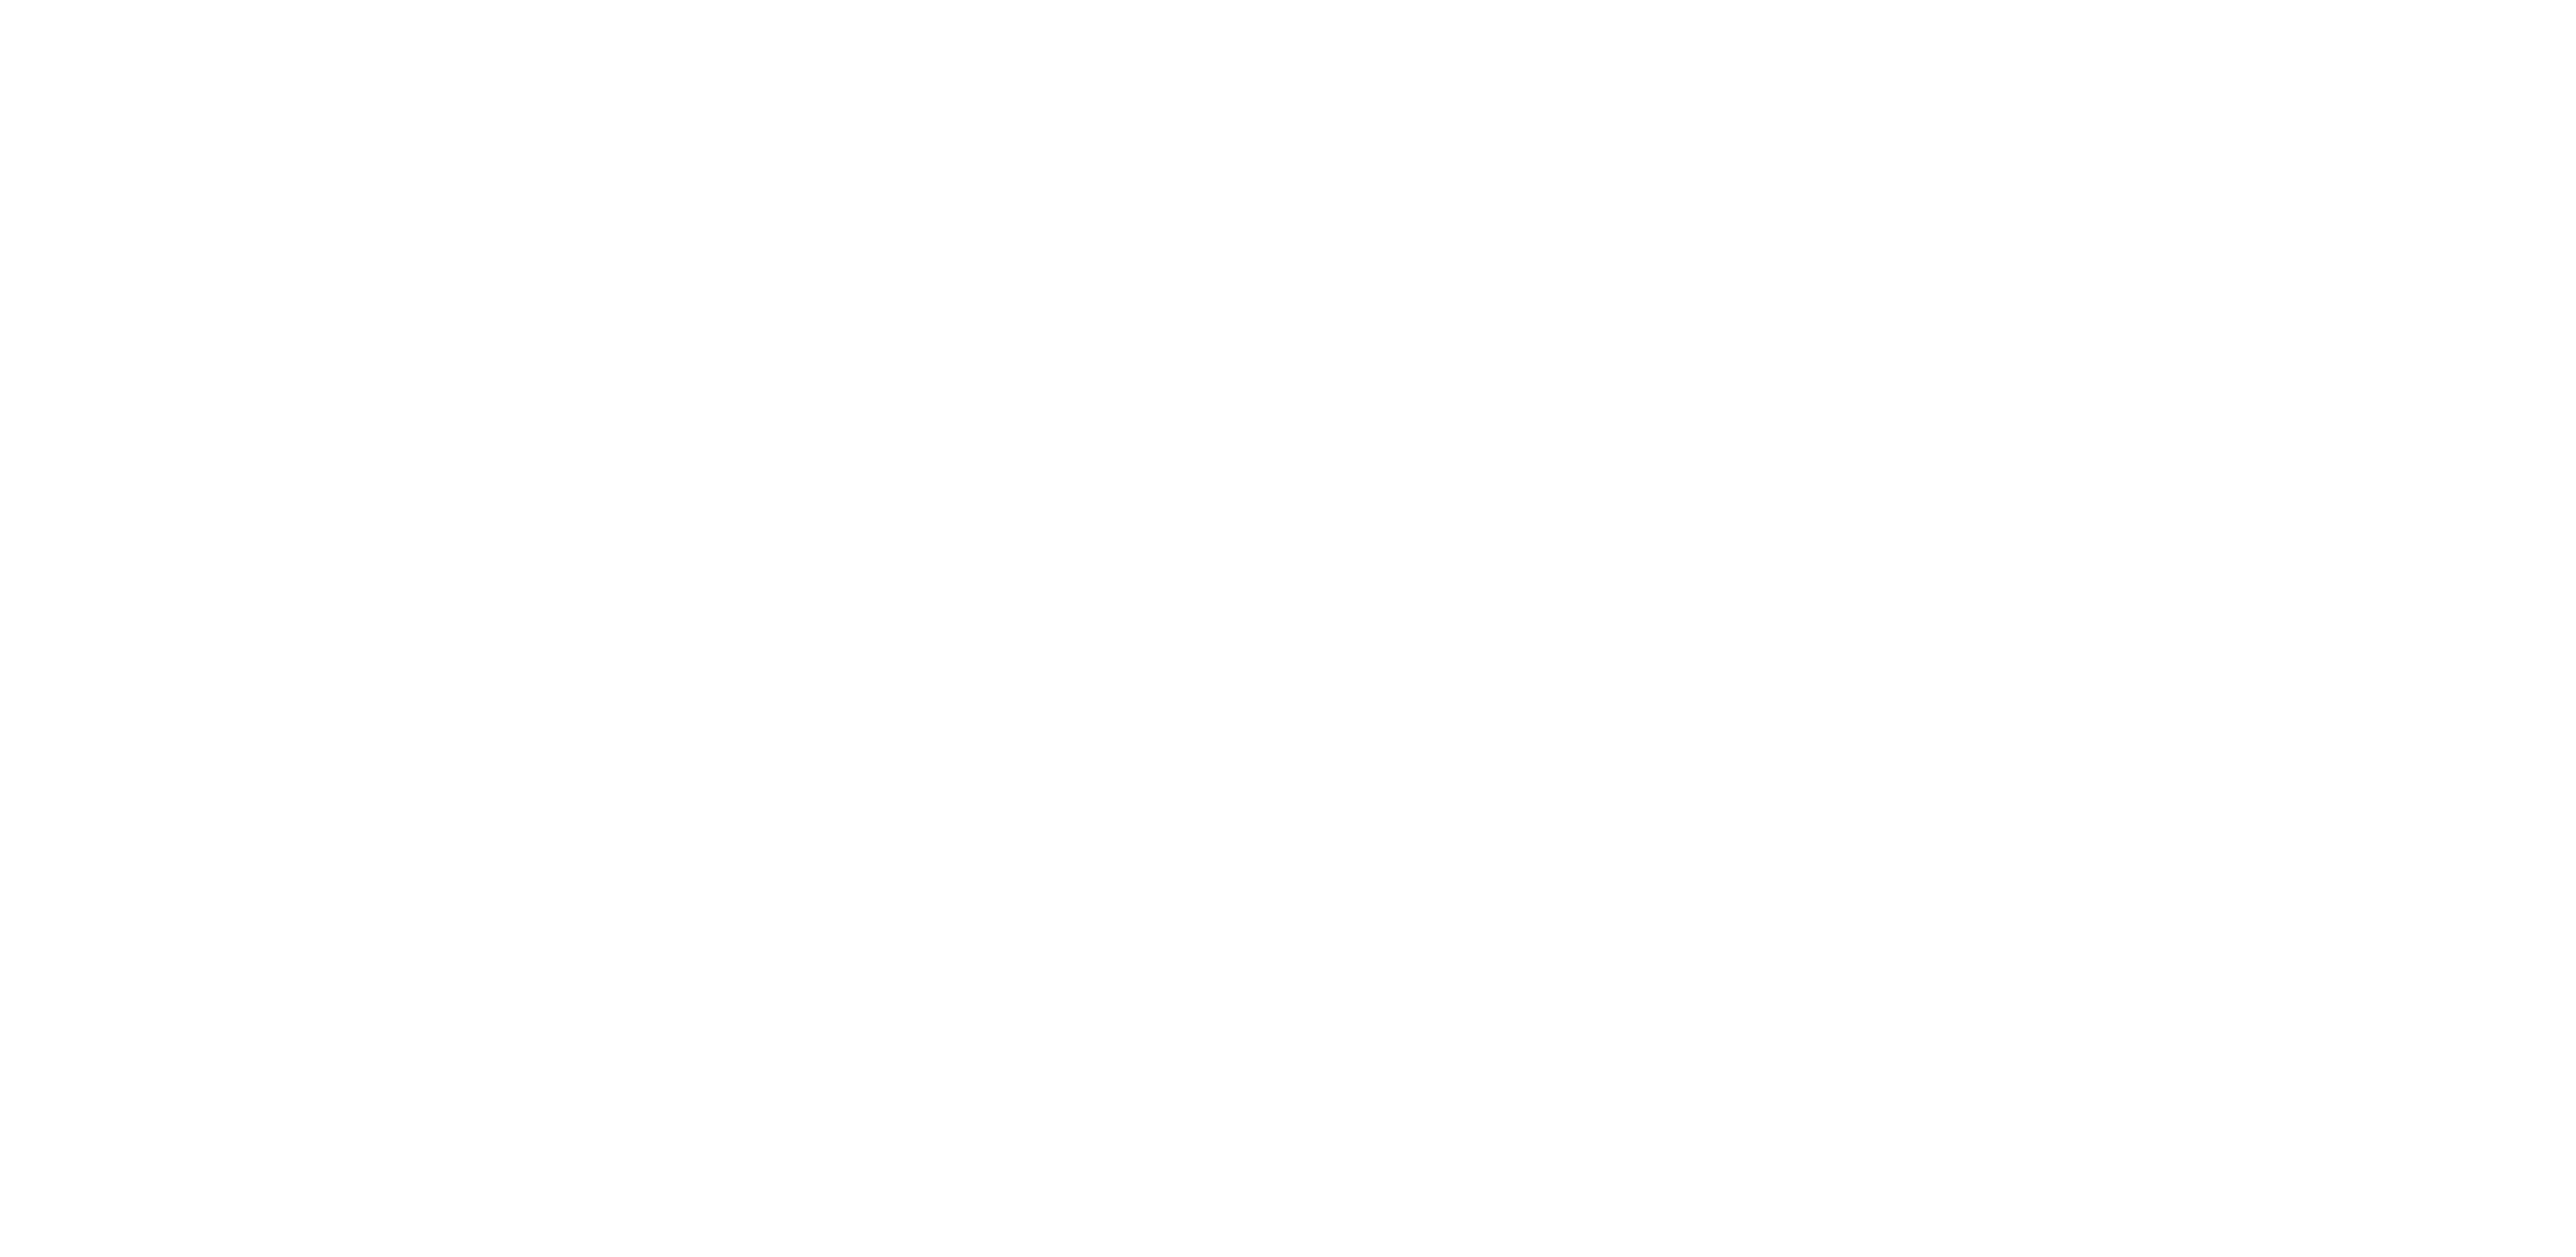 AKRAS - Olli Äkräs Music